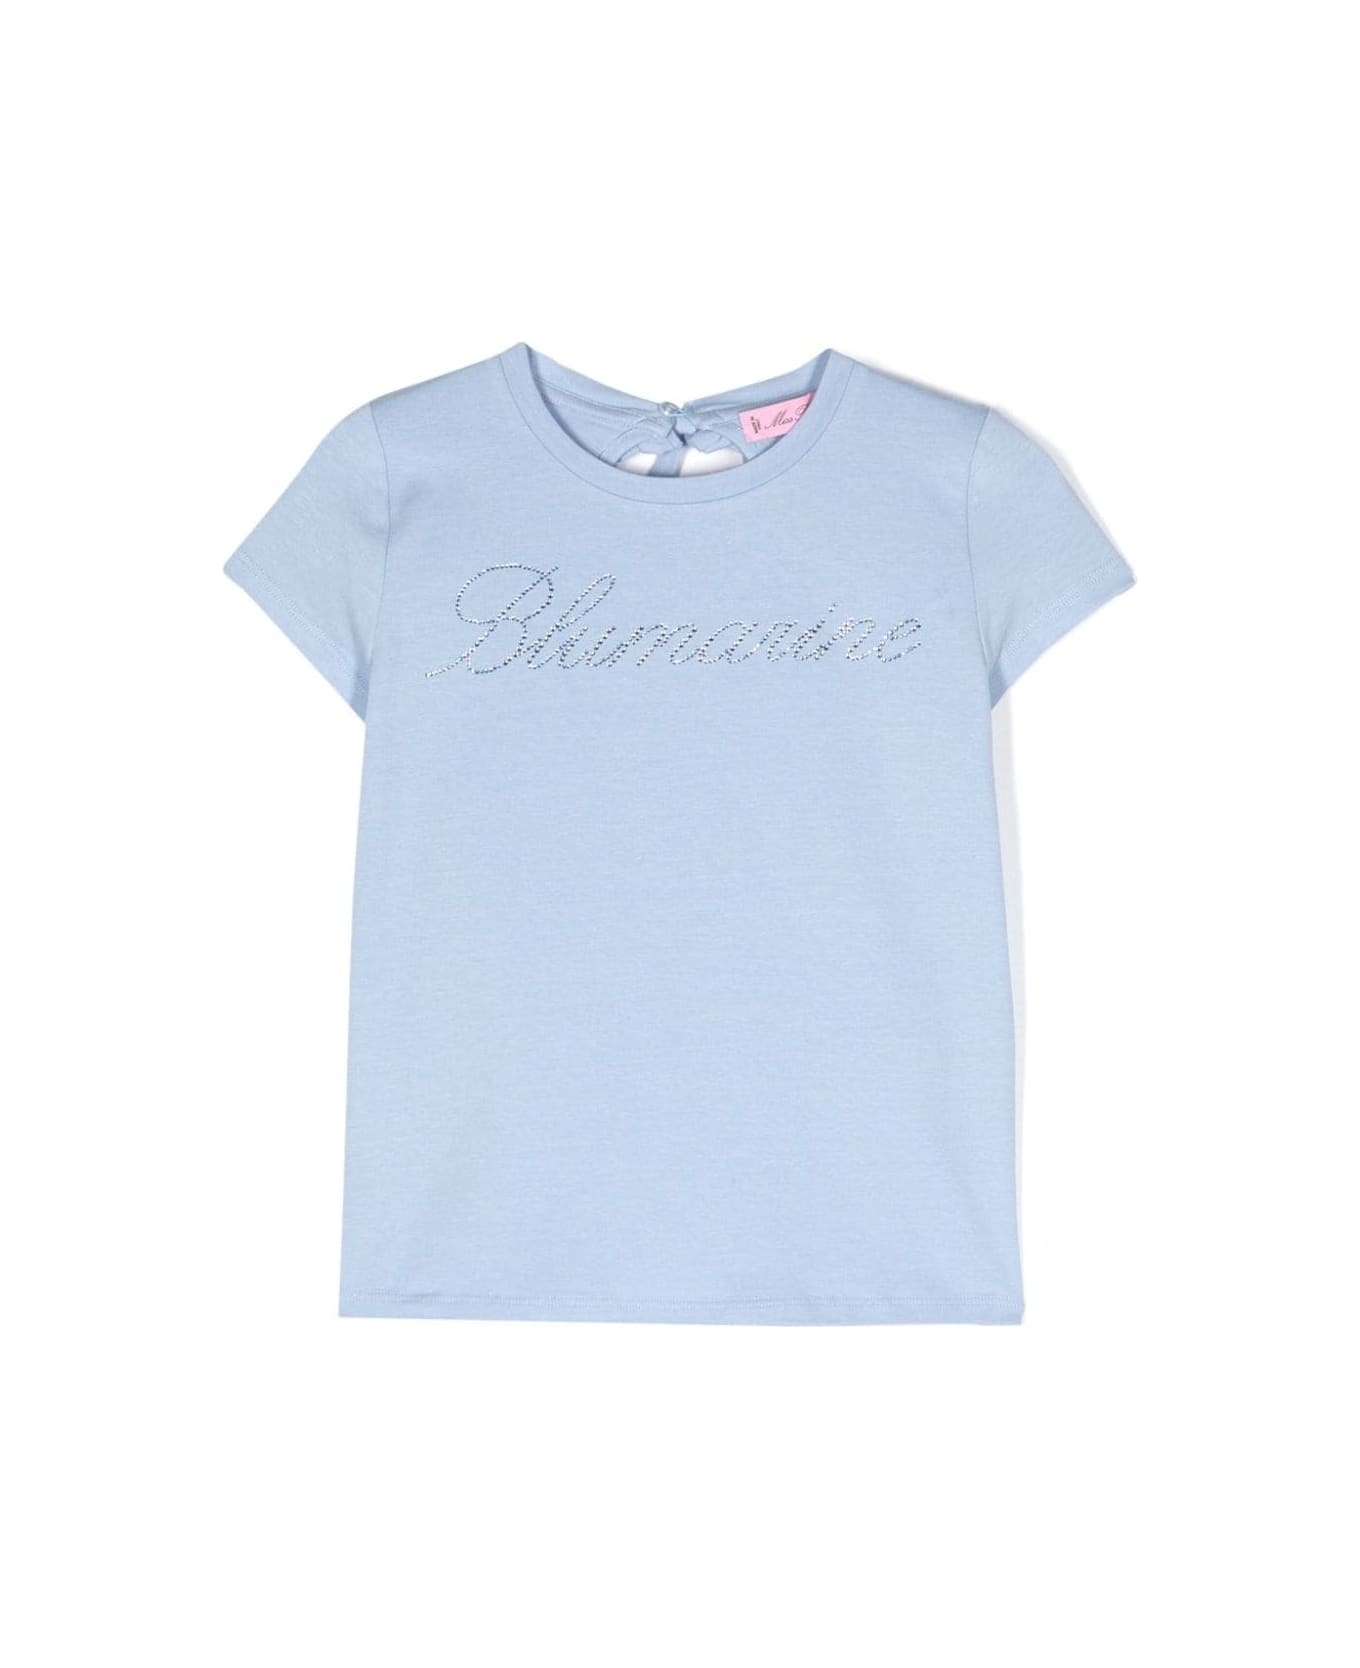 Miss Blumarine Light Blue T-shirt With Rhinestone Logo And Ruffle Detail - LIGHT BLUE